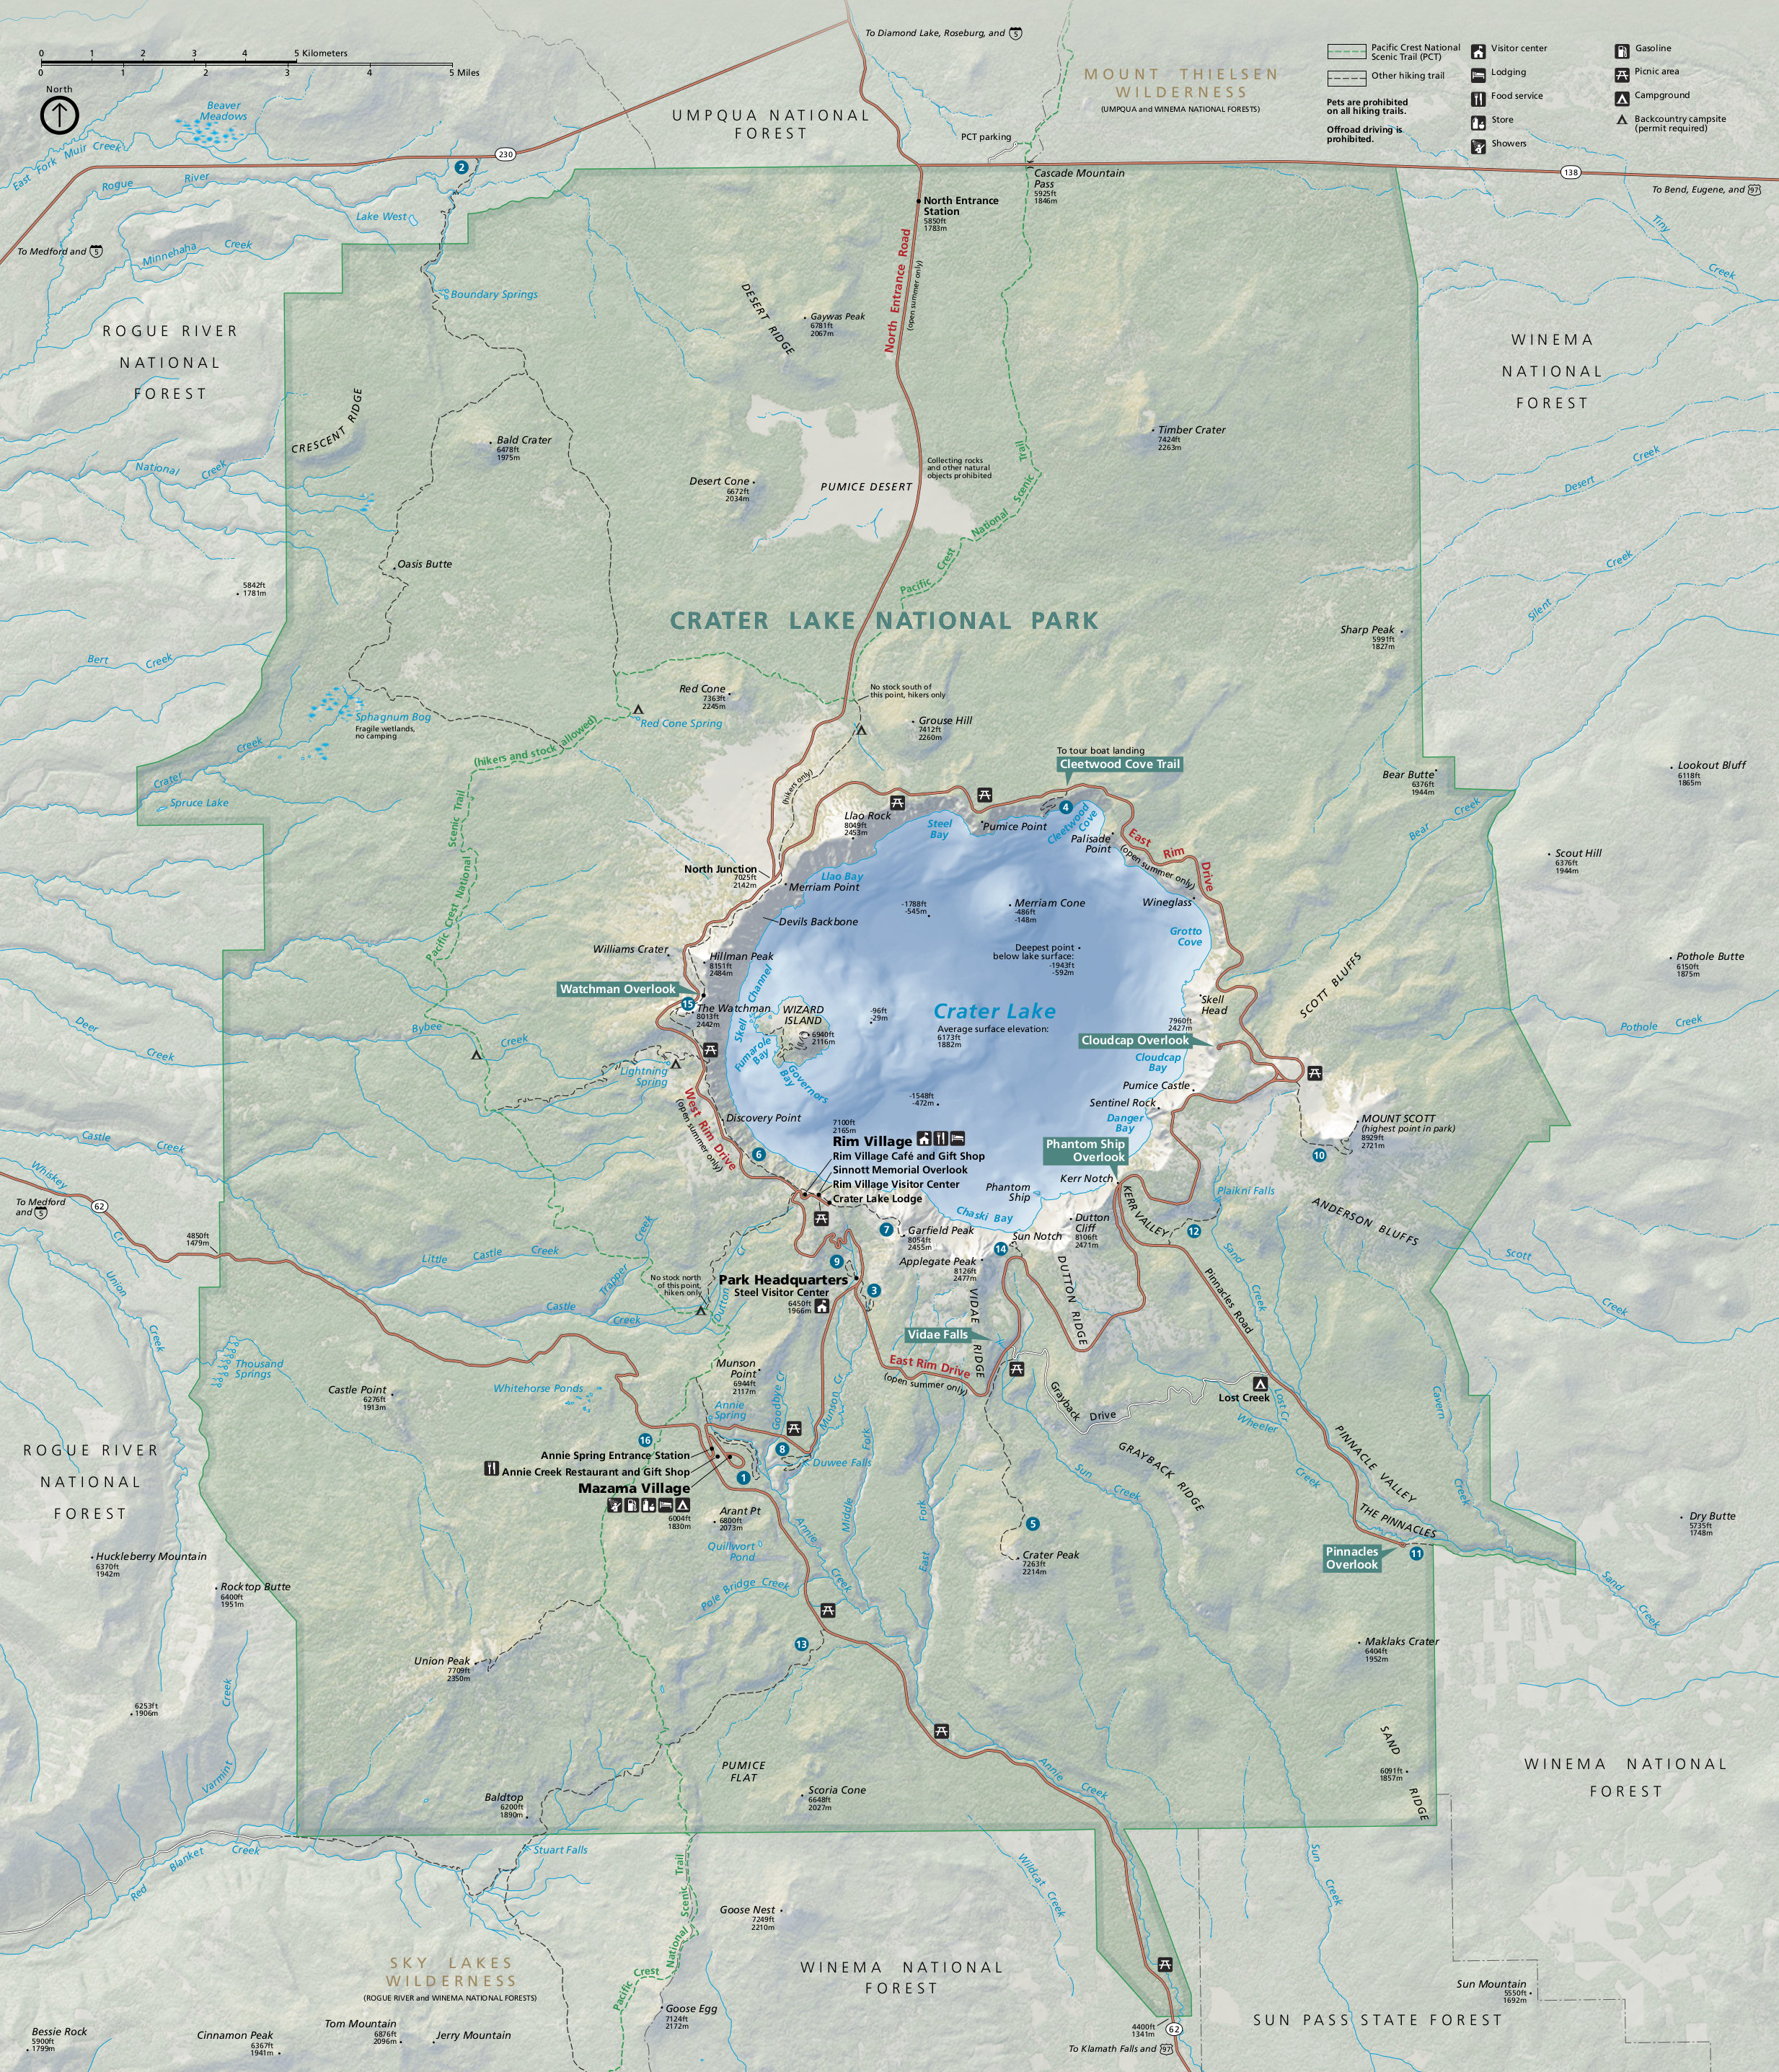 File:NPS crater-lake-map.jpg - Wikimedia Commons